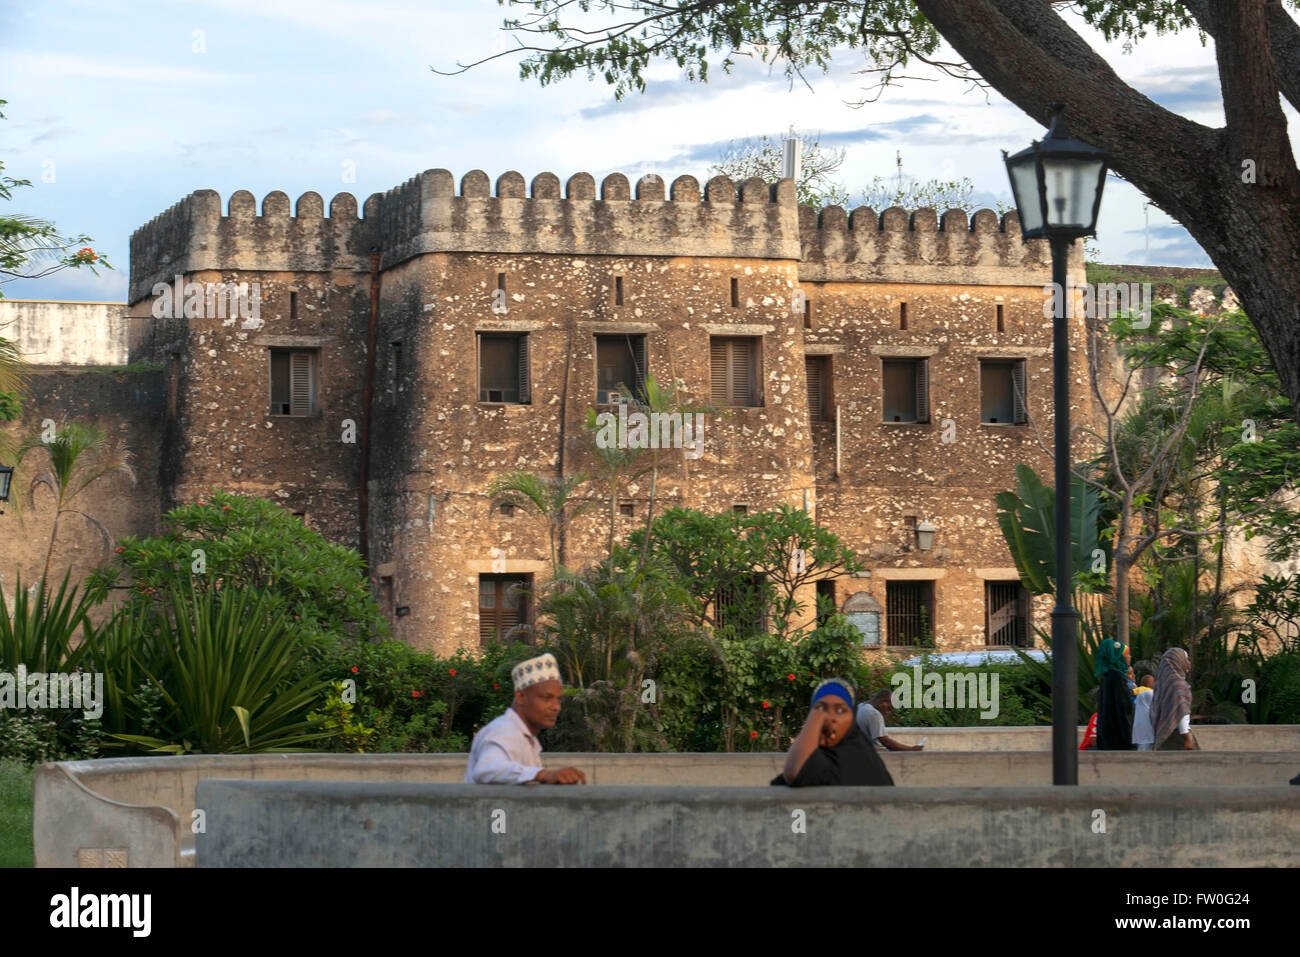 View of The Old Fort from Forodhani Gardens, Stone Town, Zanzibar, Tanzania. Stock Photo